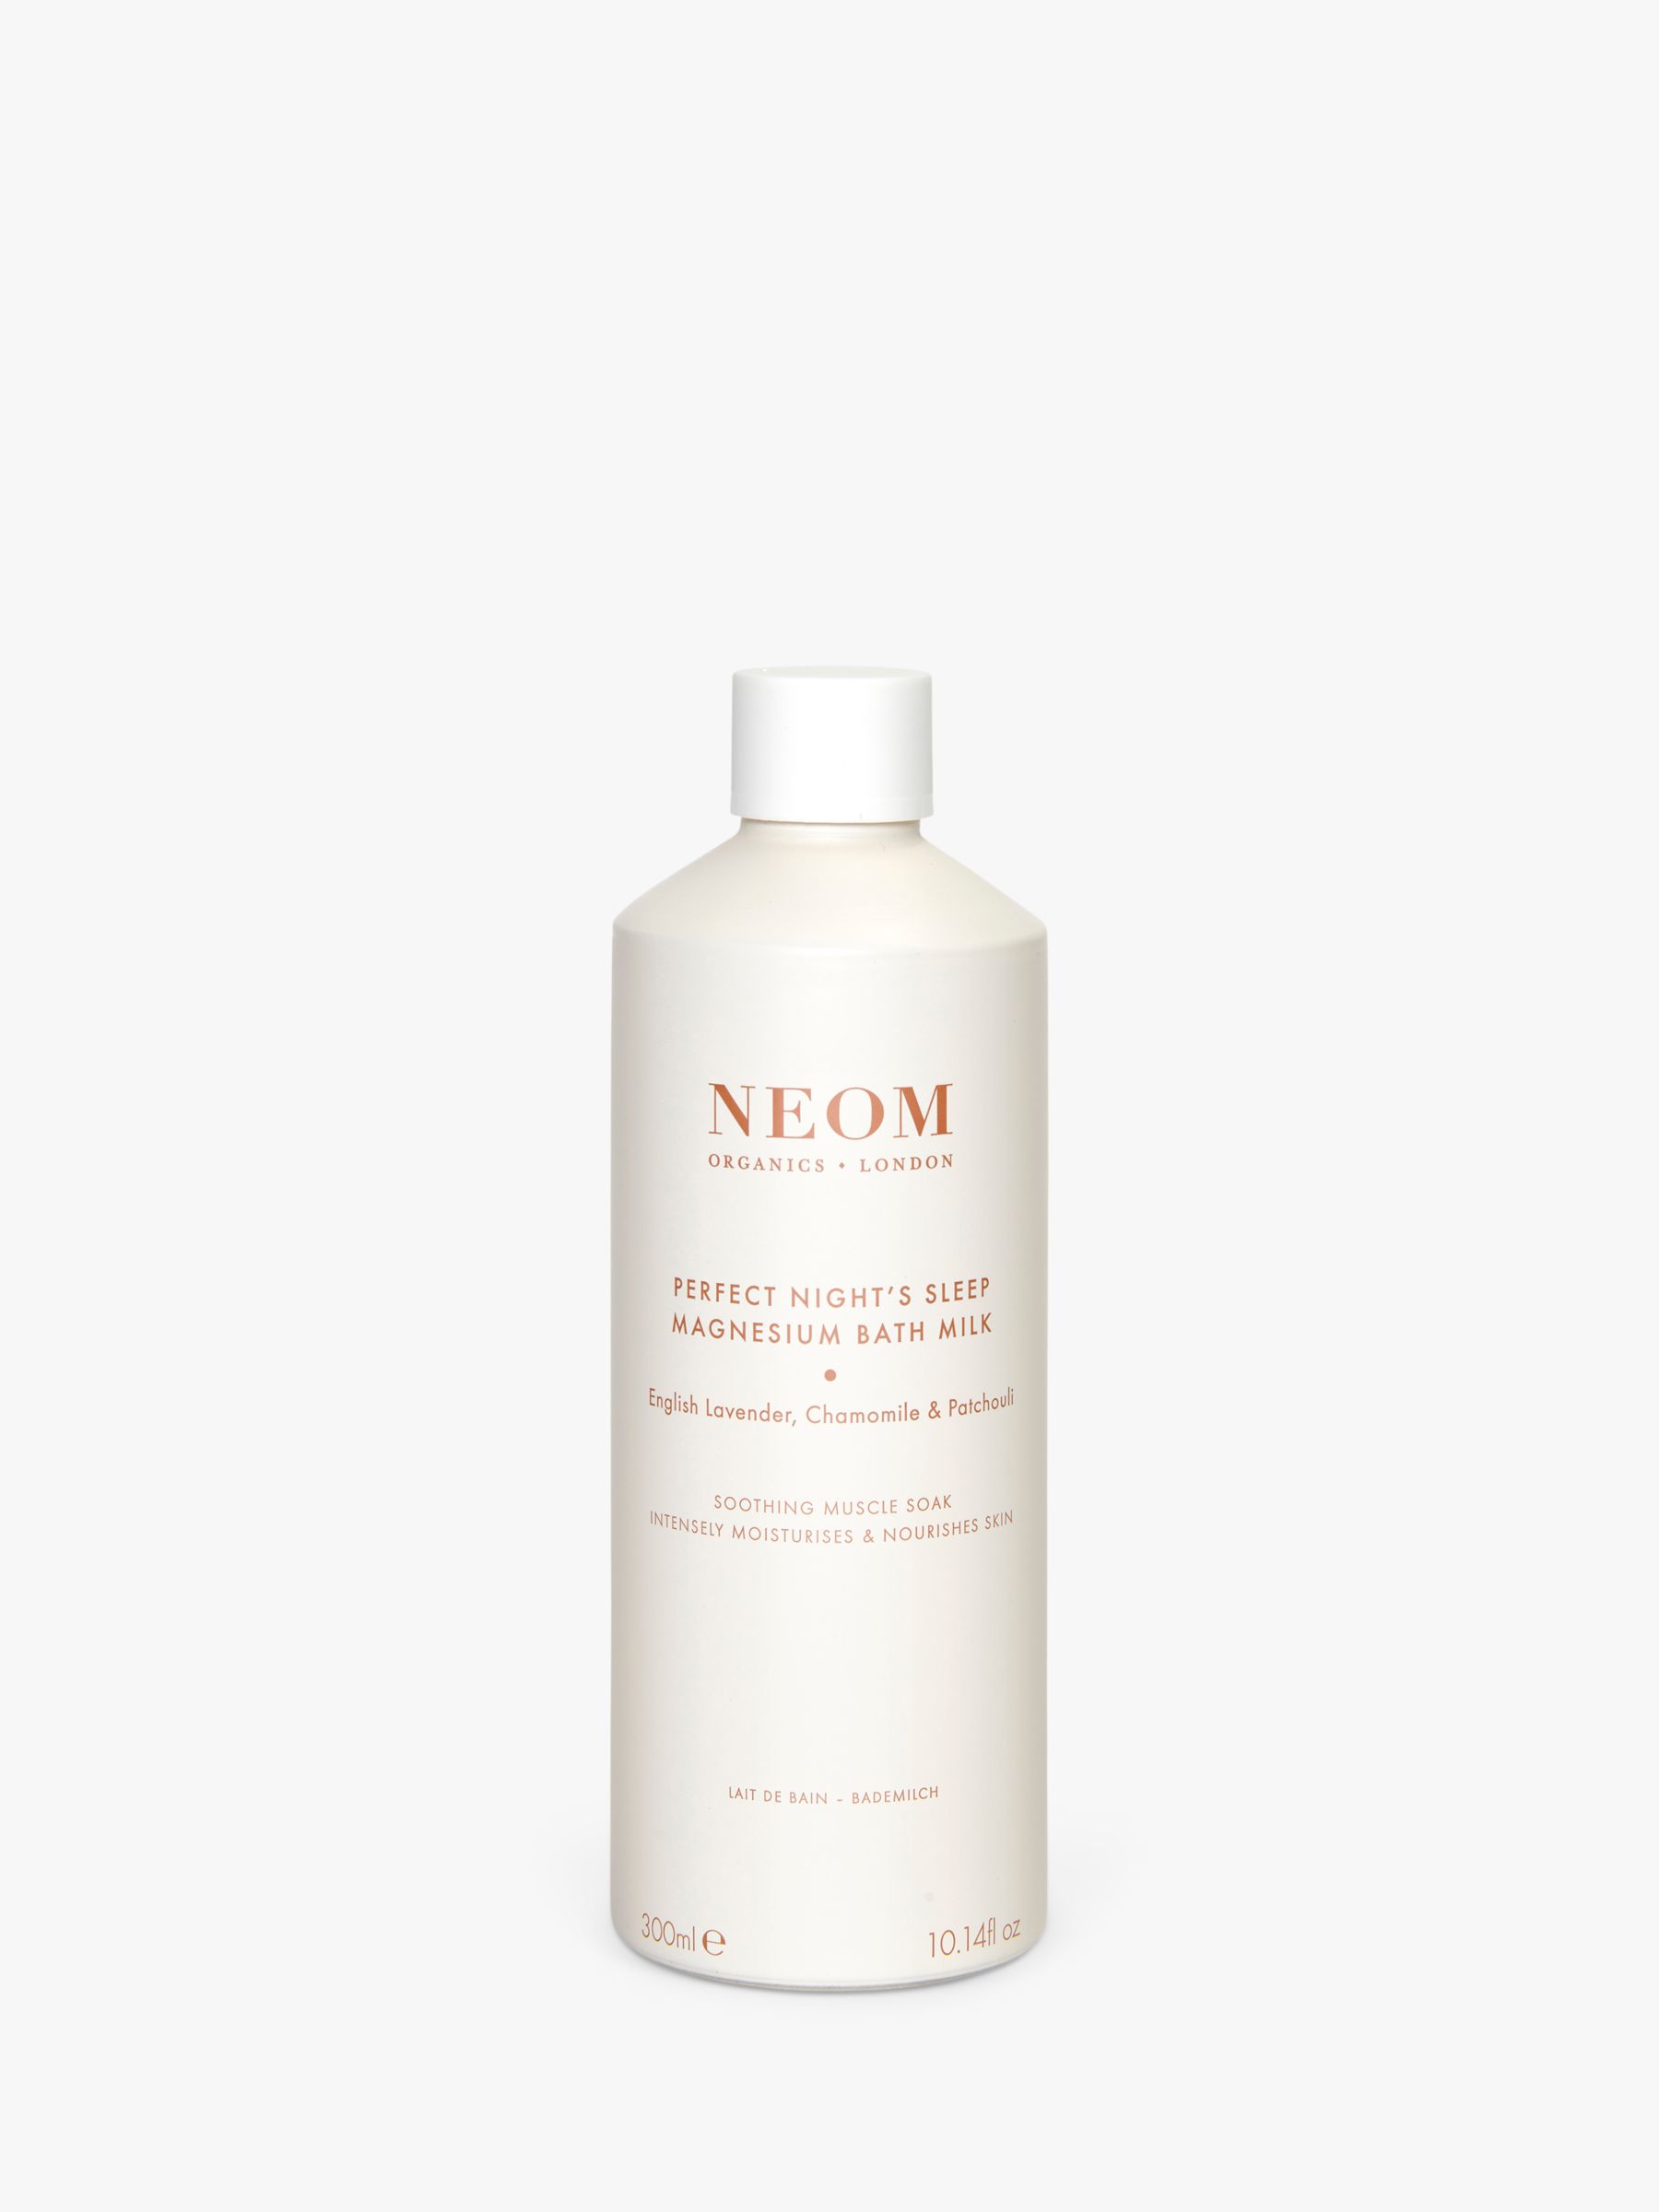 Neom Organics London Perfect Night's Sleep Magnesium Bath Milk, 300ml